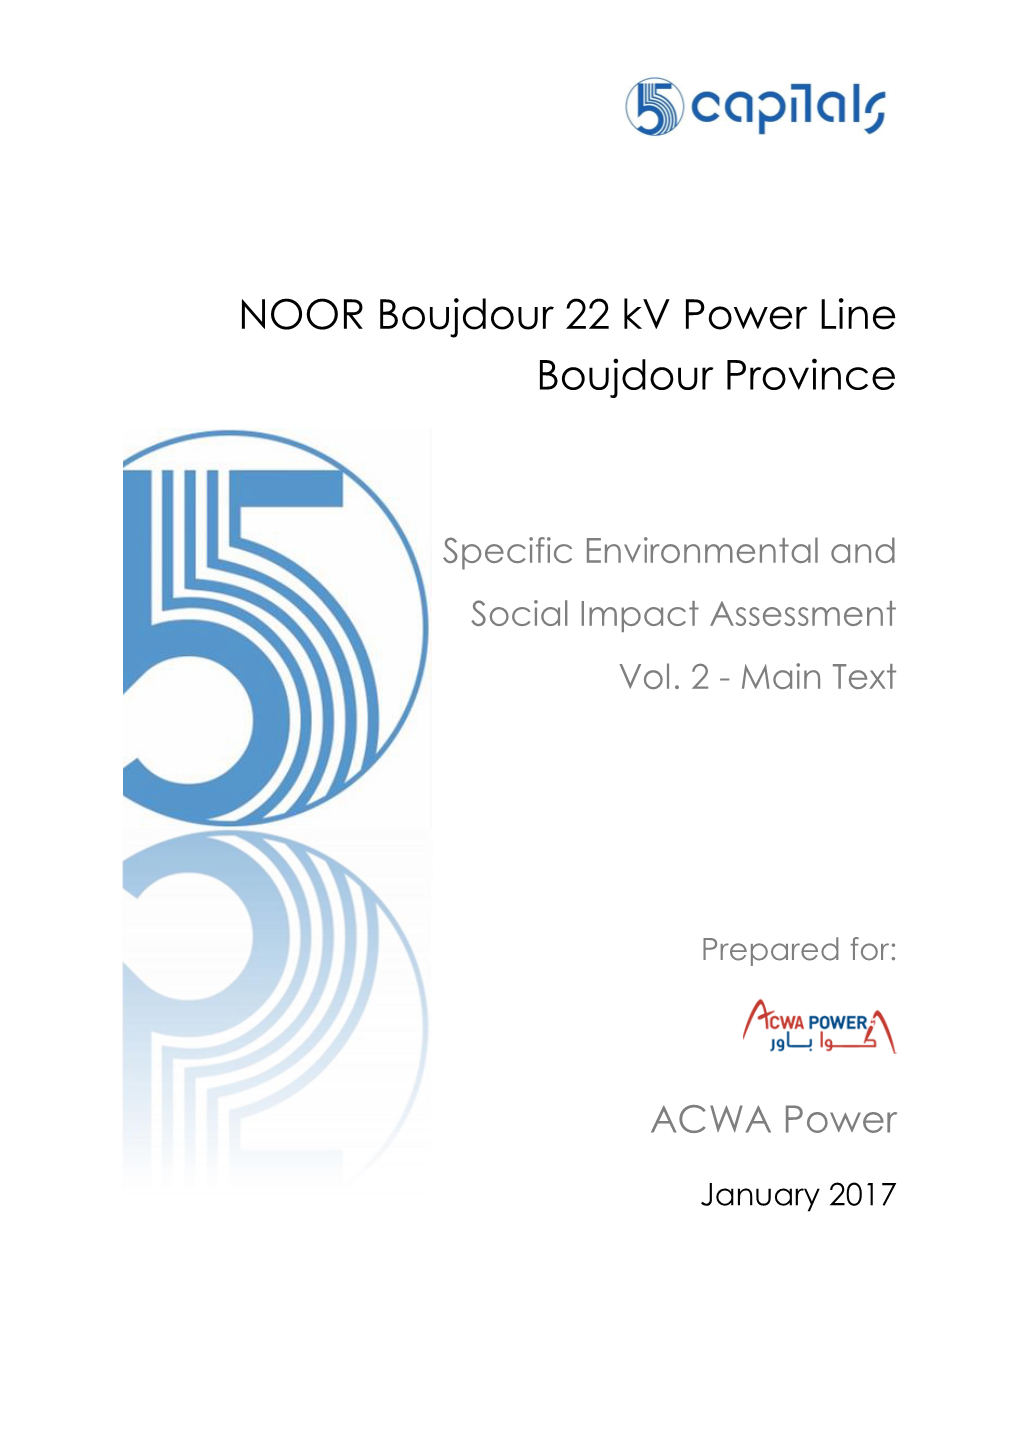 NOOR Boujdour 22 Kv Power Line Boujdour Province